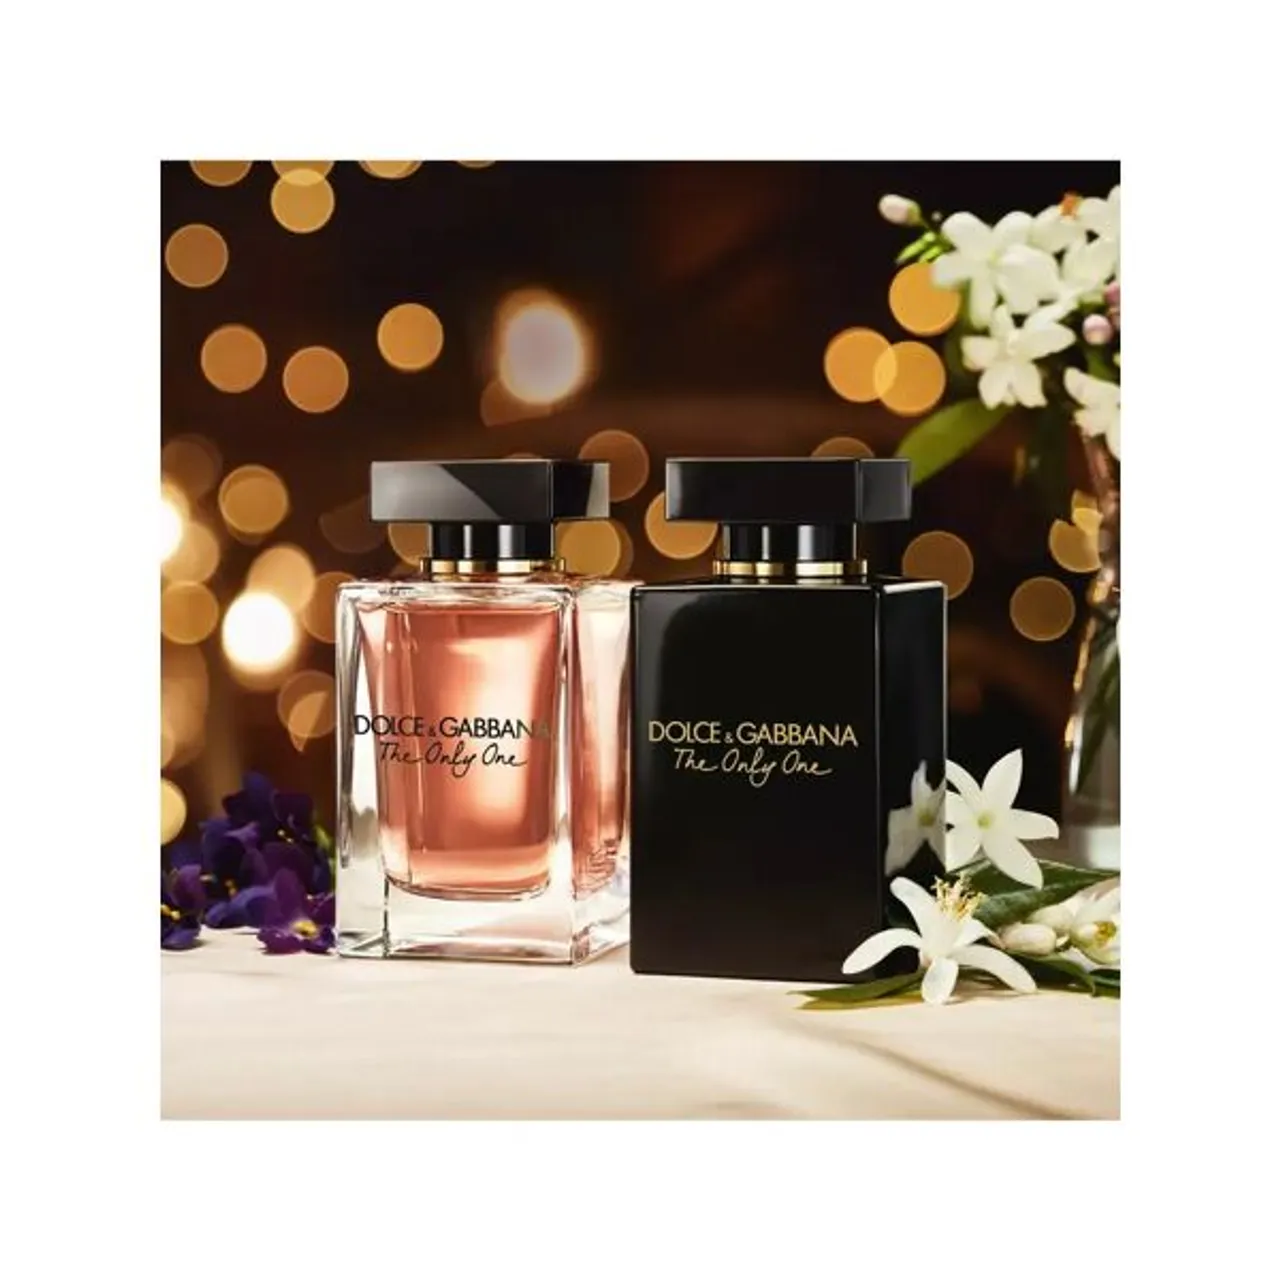 Dolce & Gabbana The Only One Eau de Parfum Intense - Female - Size: 50ml